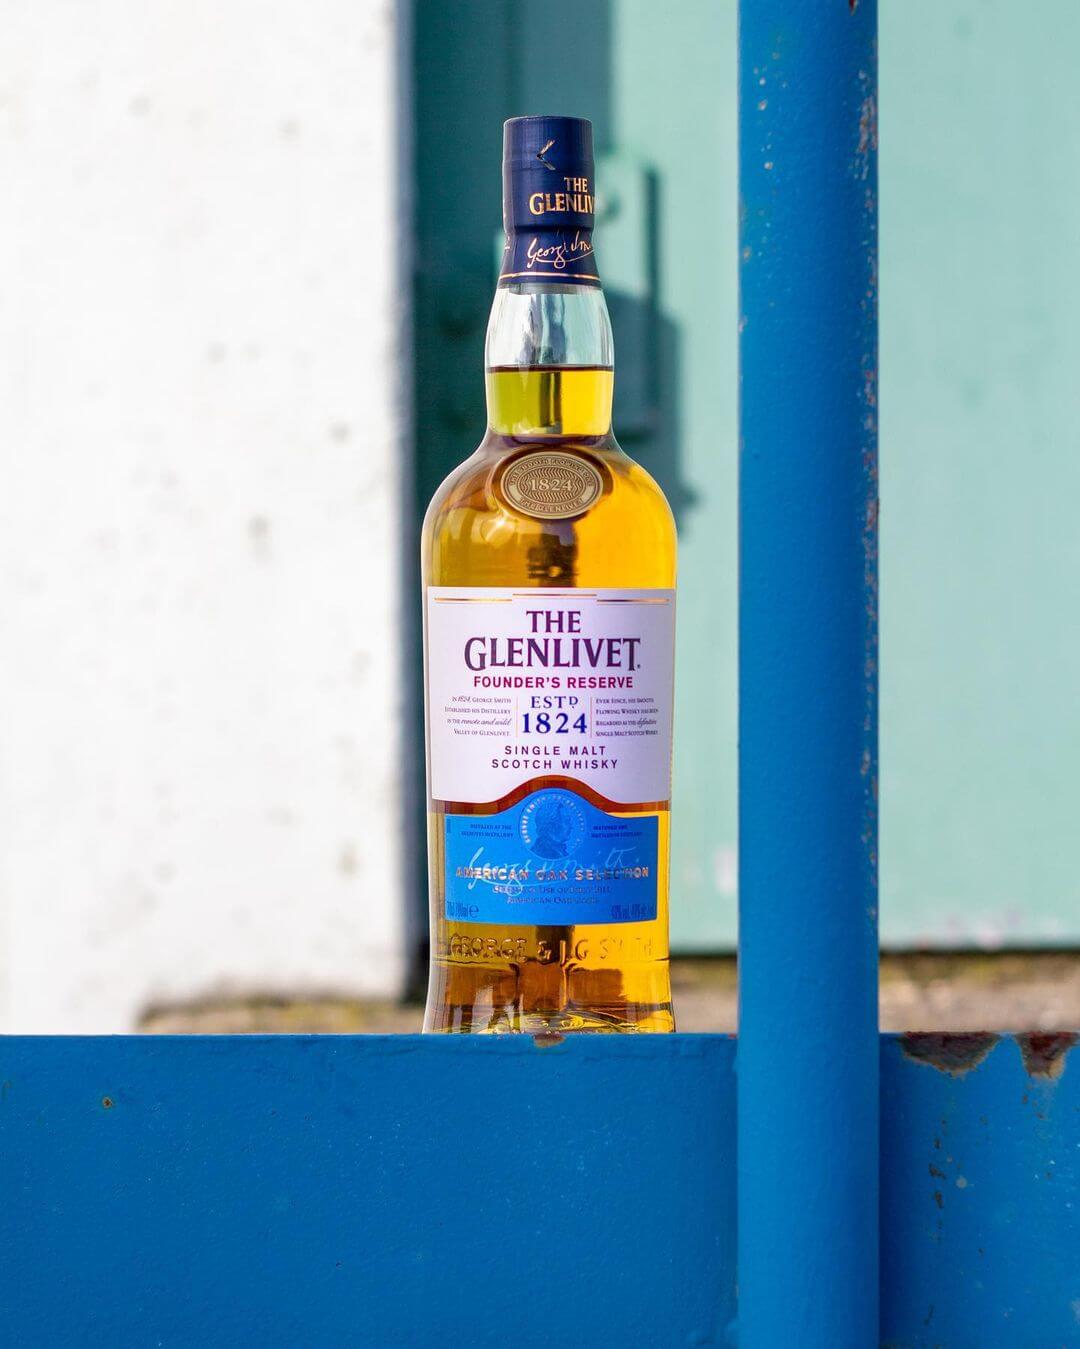 The Glenlivet Founder's Reserve UK Speyside Single Malt Scotch Whisky